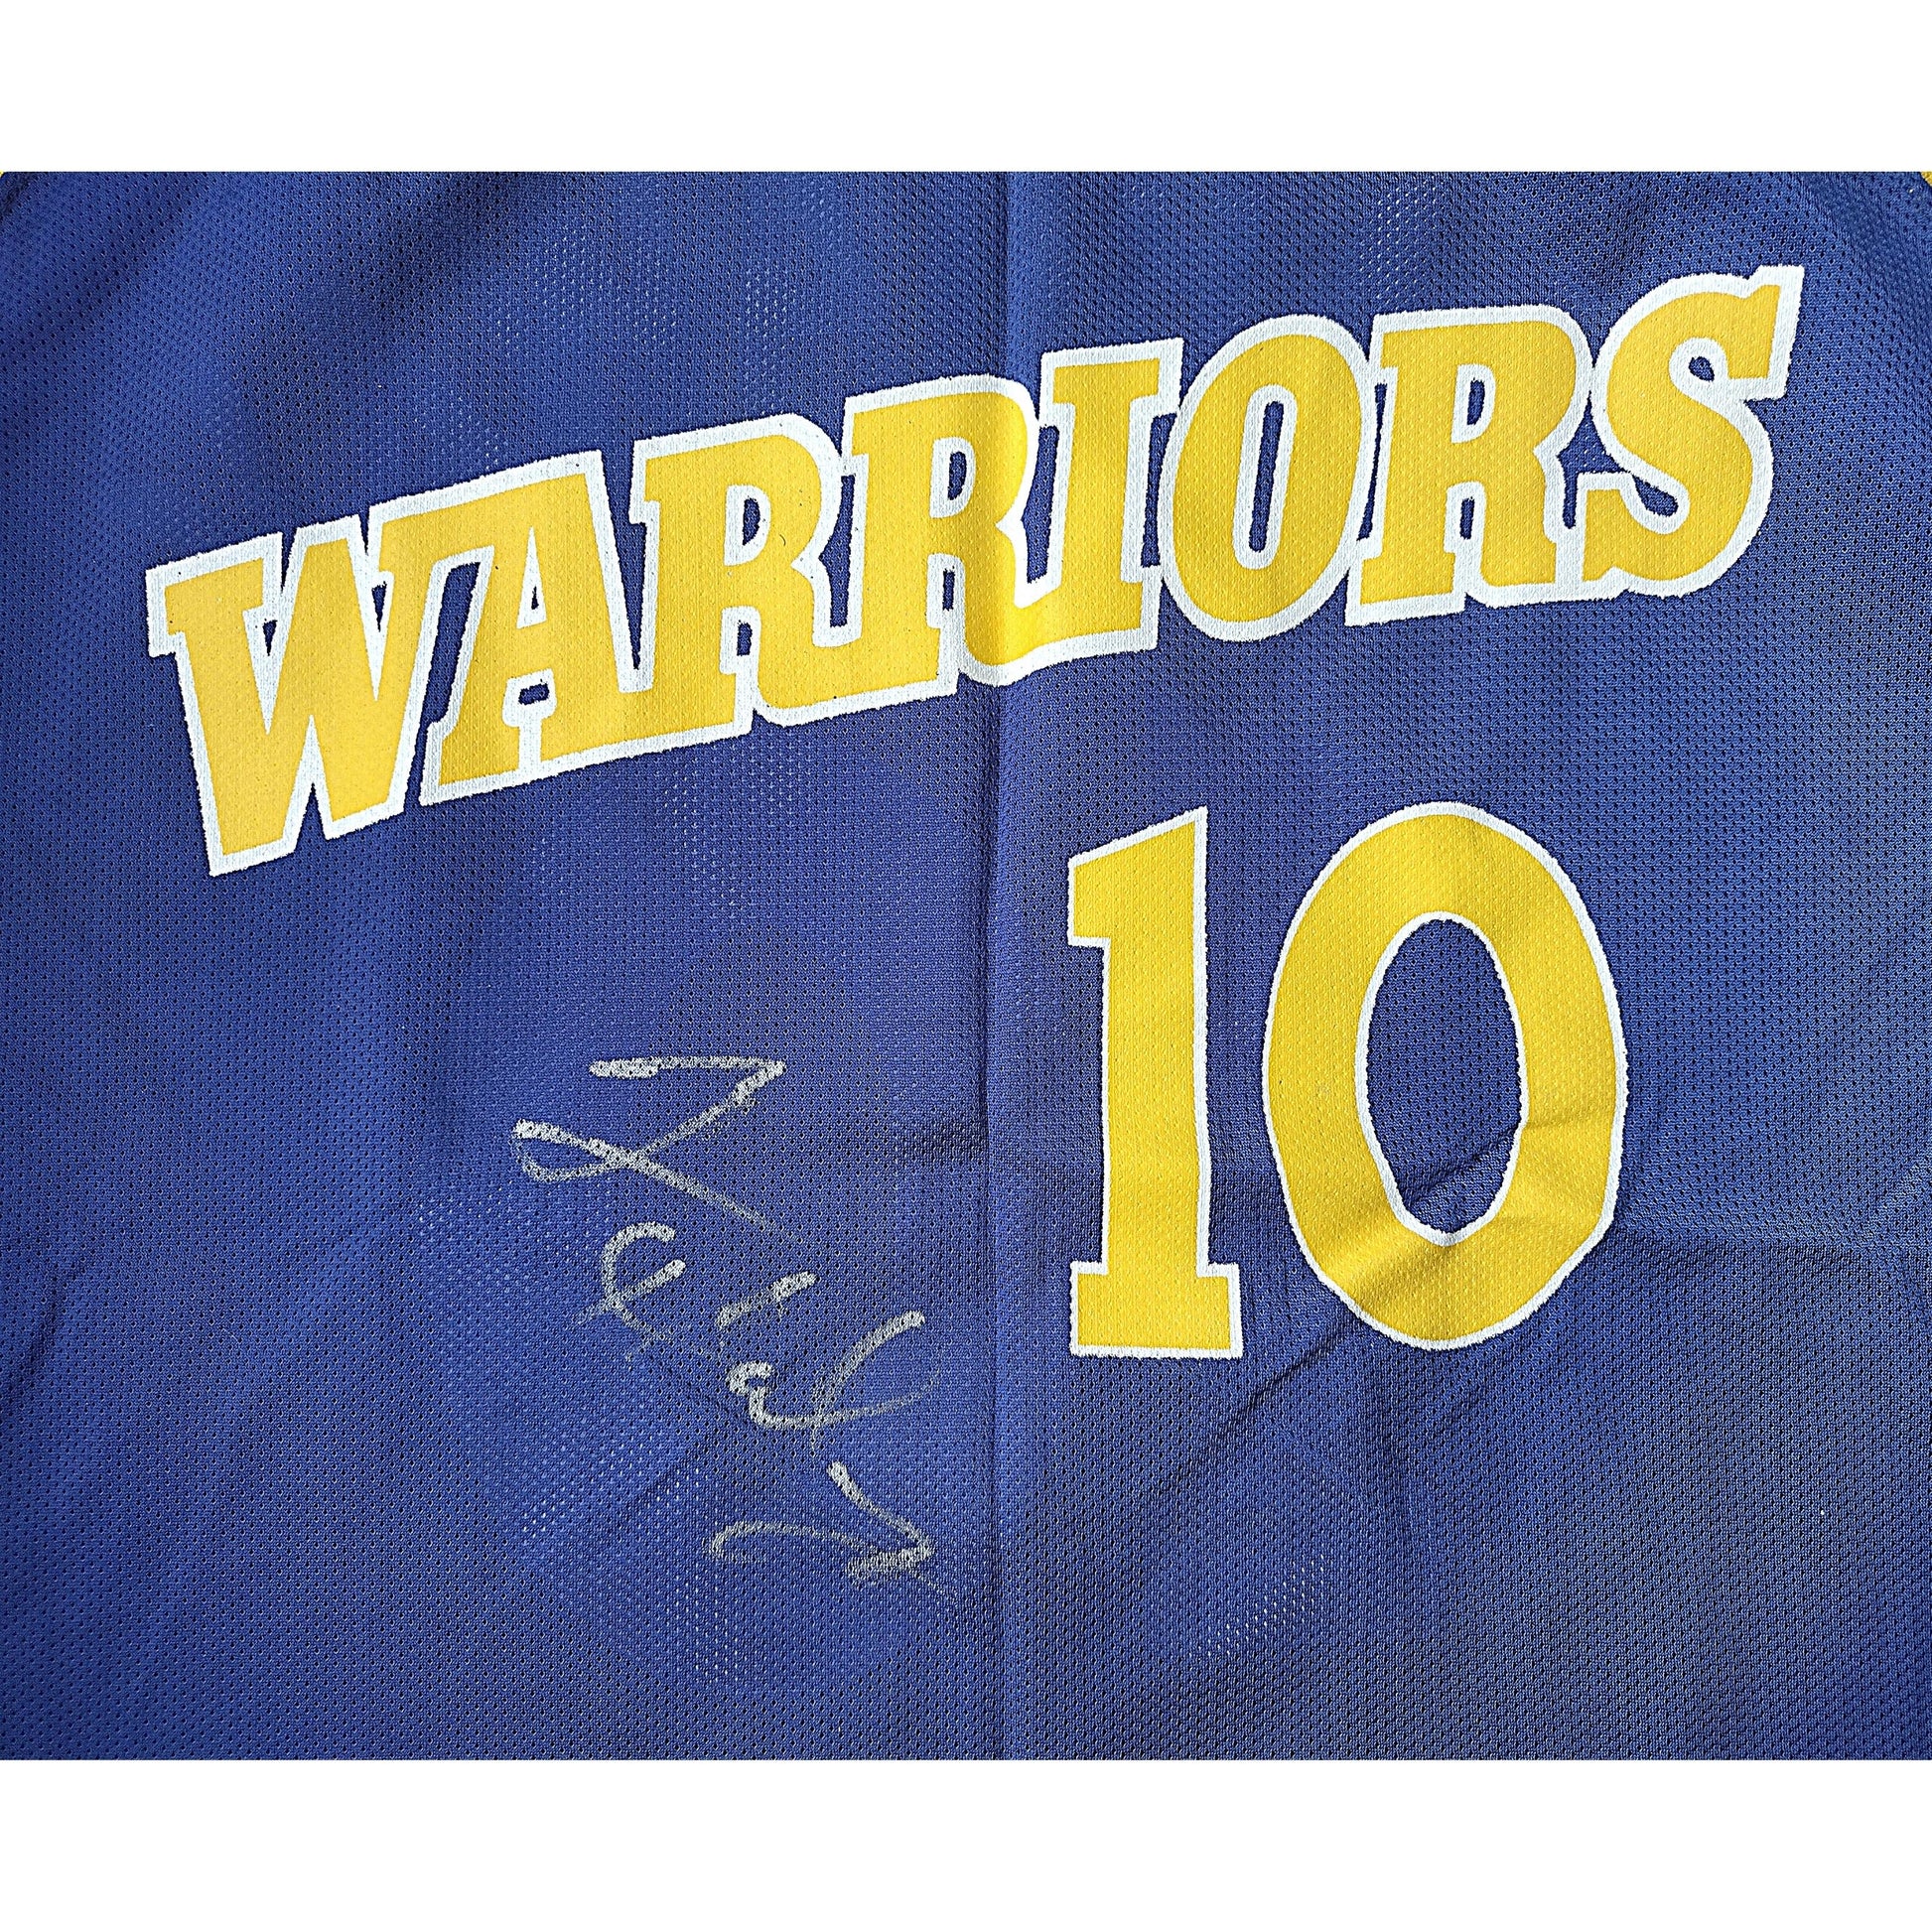 Gary Payton II Signed Golden State Warriors Jersey (PSA) 2022 NBA